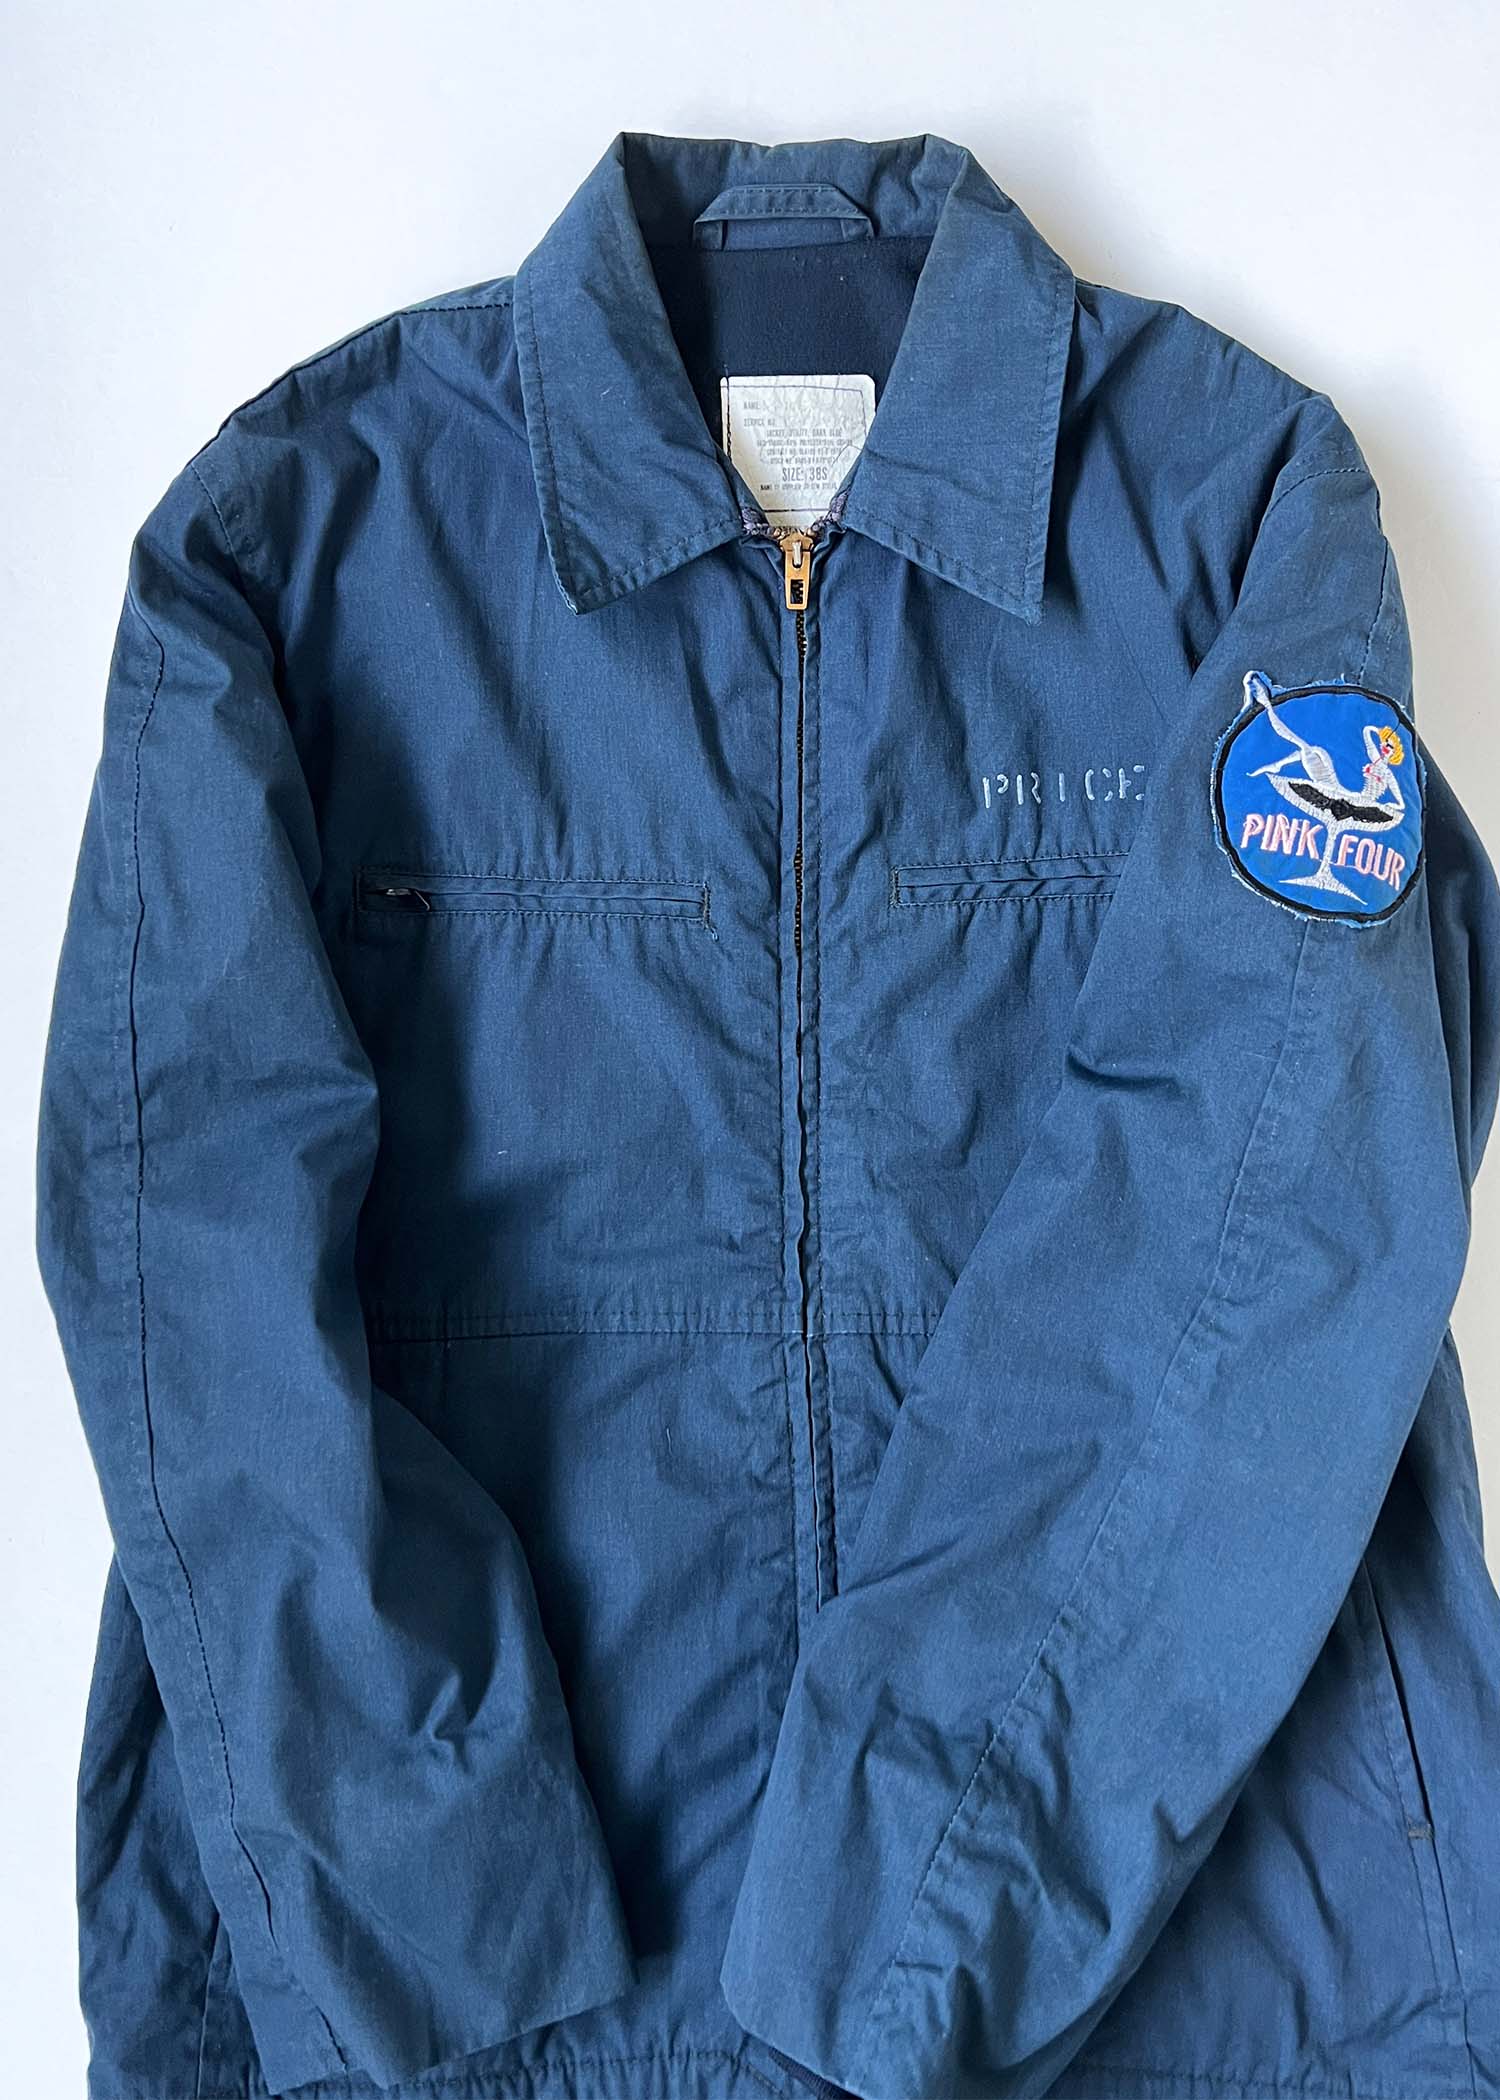 90s USN service jacket